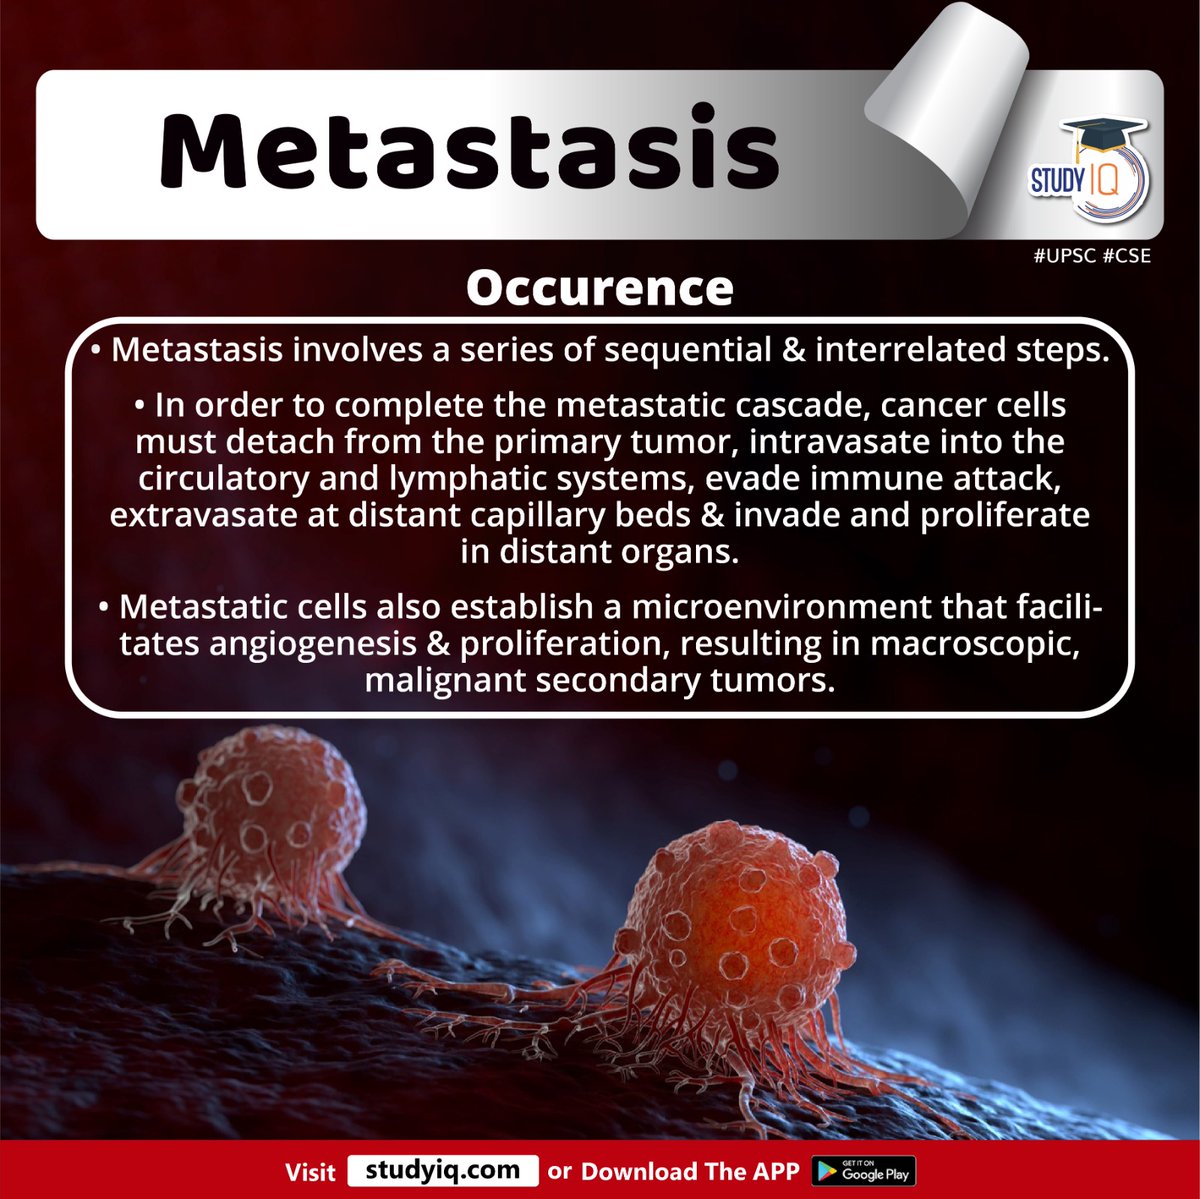 Metastasis

#metastasis #texastechuniversity #cancercells #learningmdel #tumor #whyinnews #organs #typeofcancer #primarytumor #metastaticcascade #immuneattack #lymphaticsystems #macroscopic #upsc #cse #ips #ias